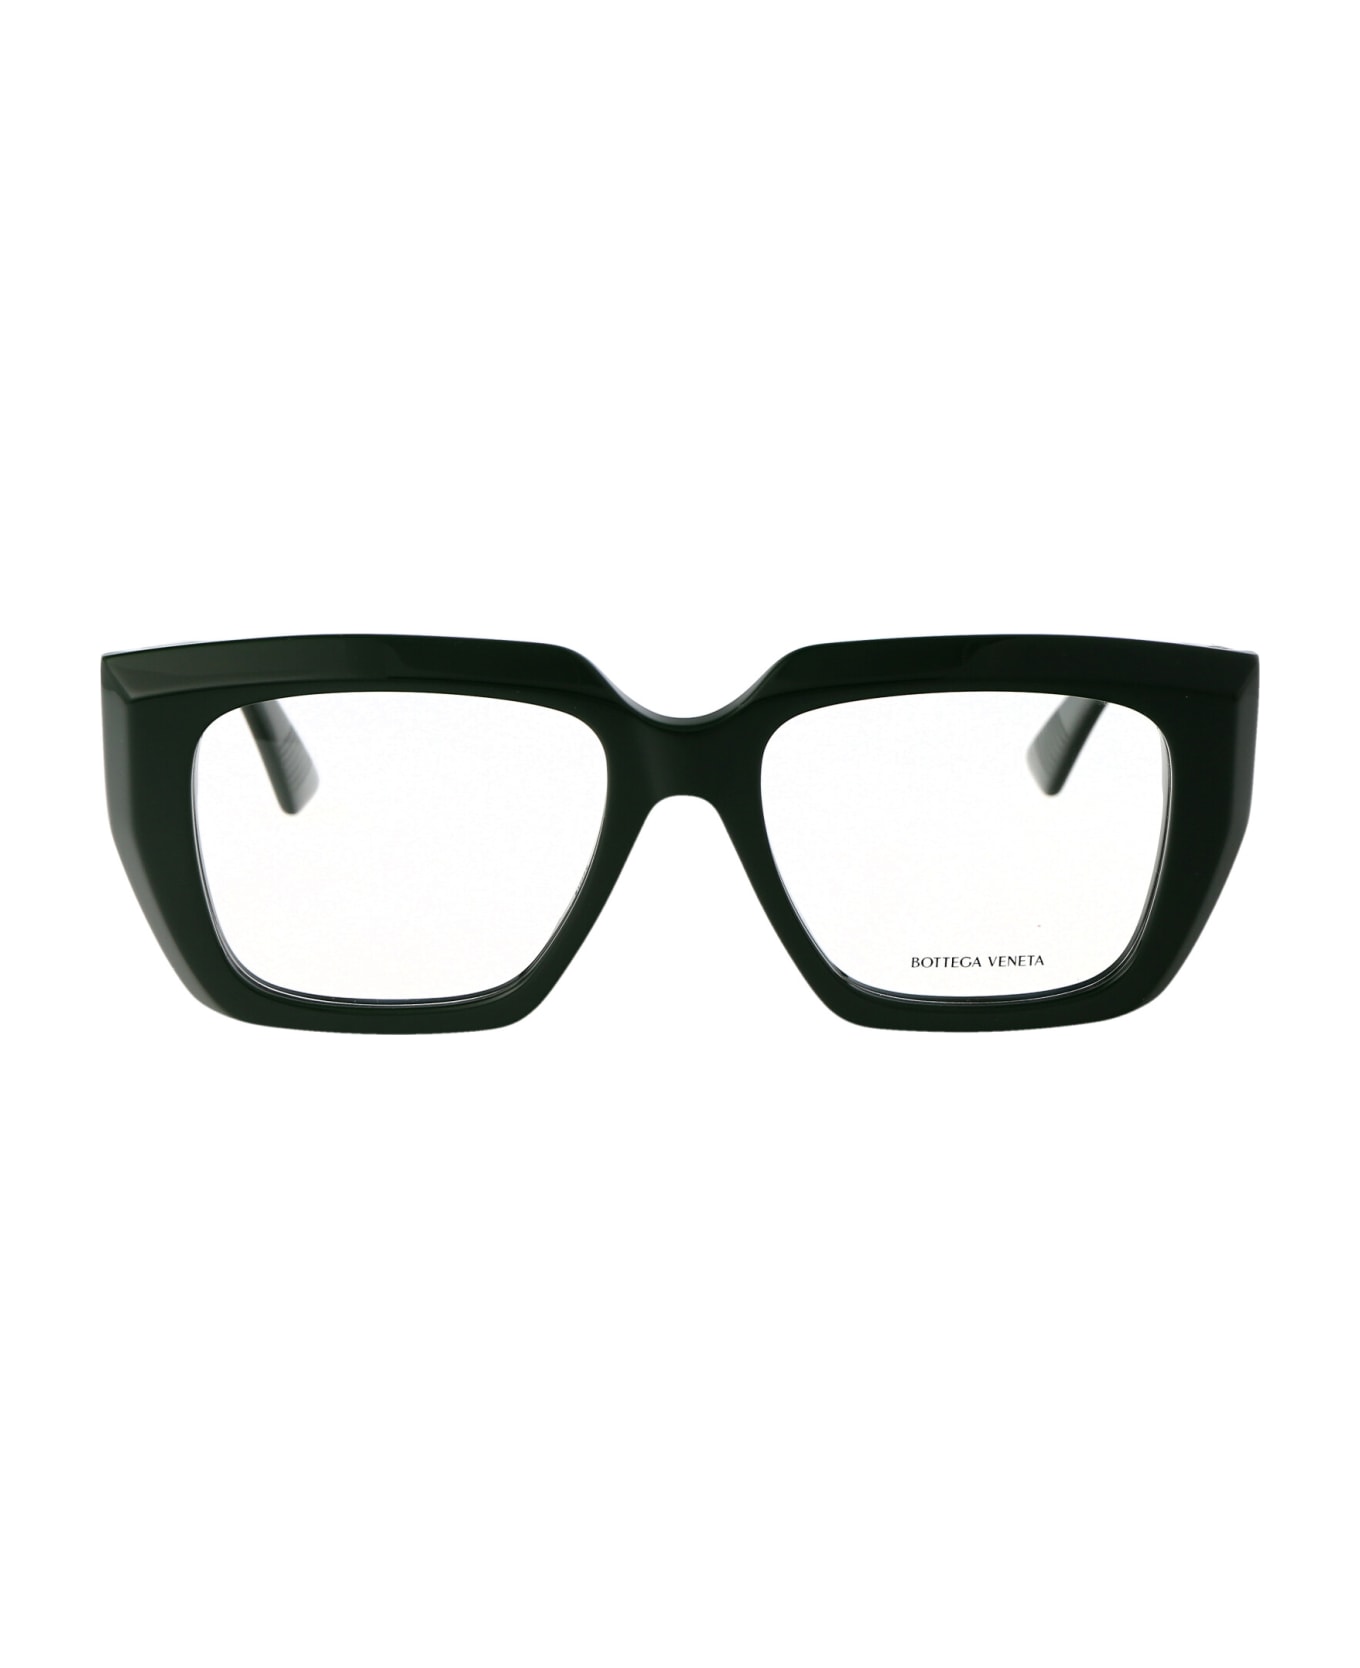 Bottega Veneta Eyewear Bv1032o Glasses - 006 GREEN GREEN TRANSPARENT